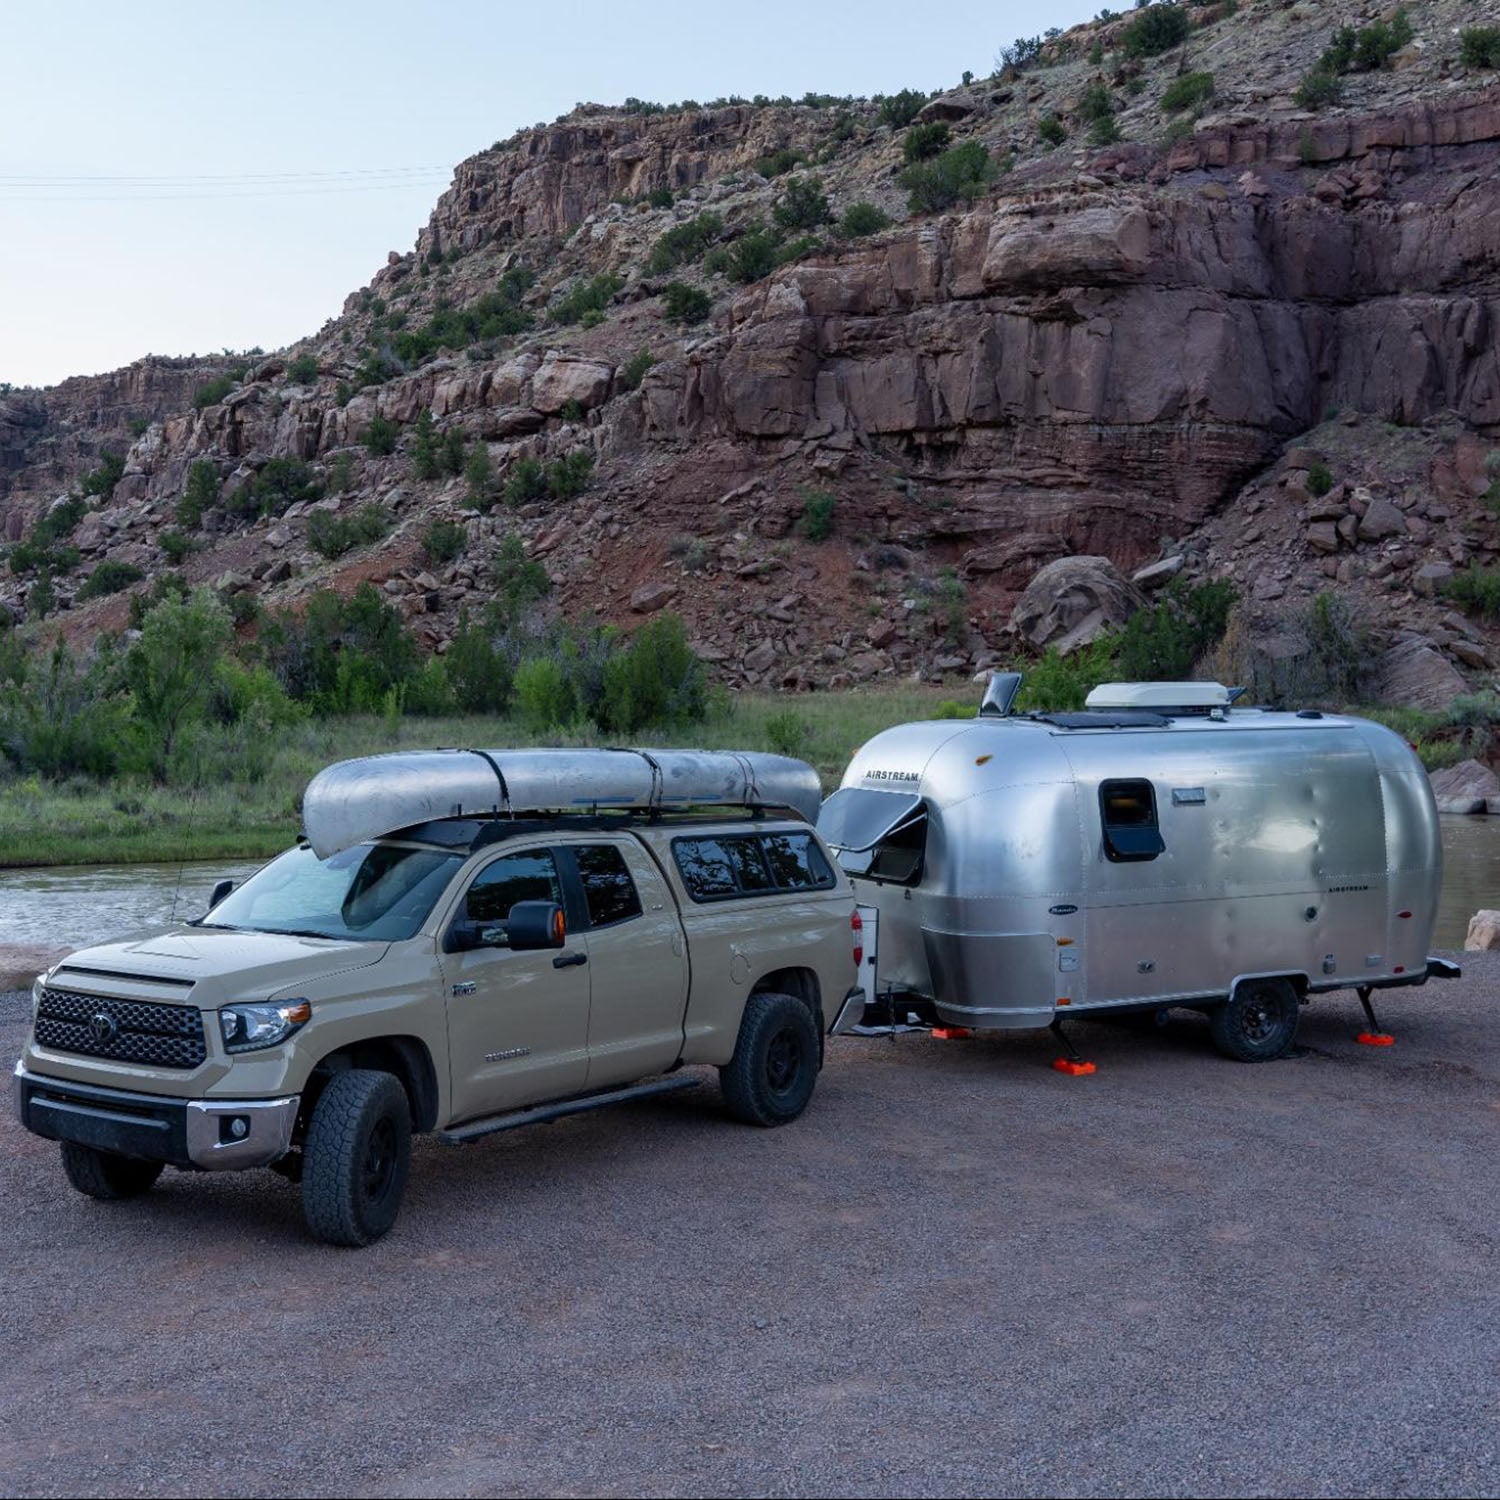 Gps camping car - Équipement caravaning